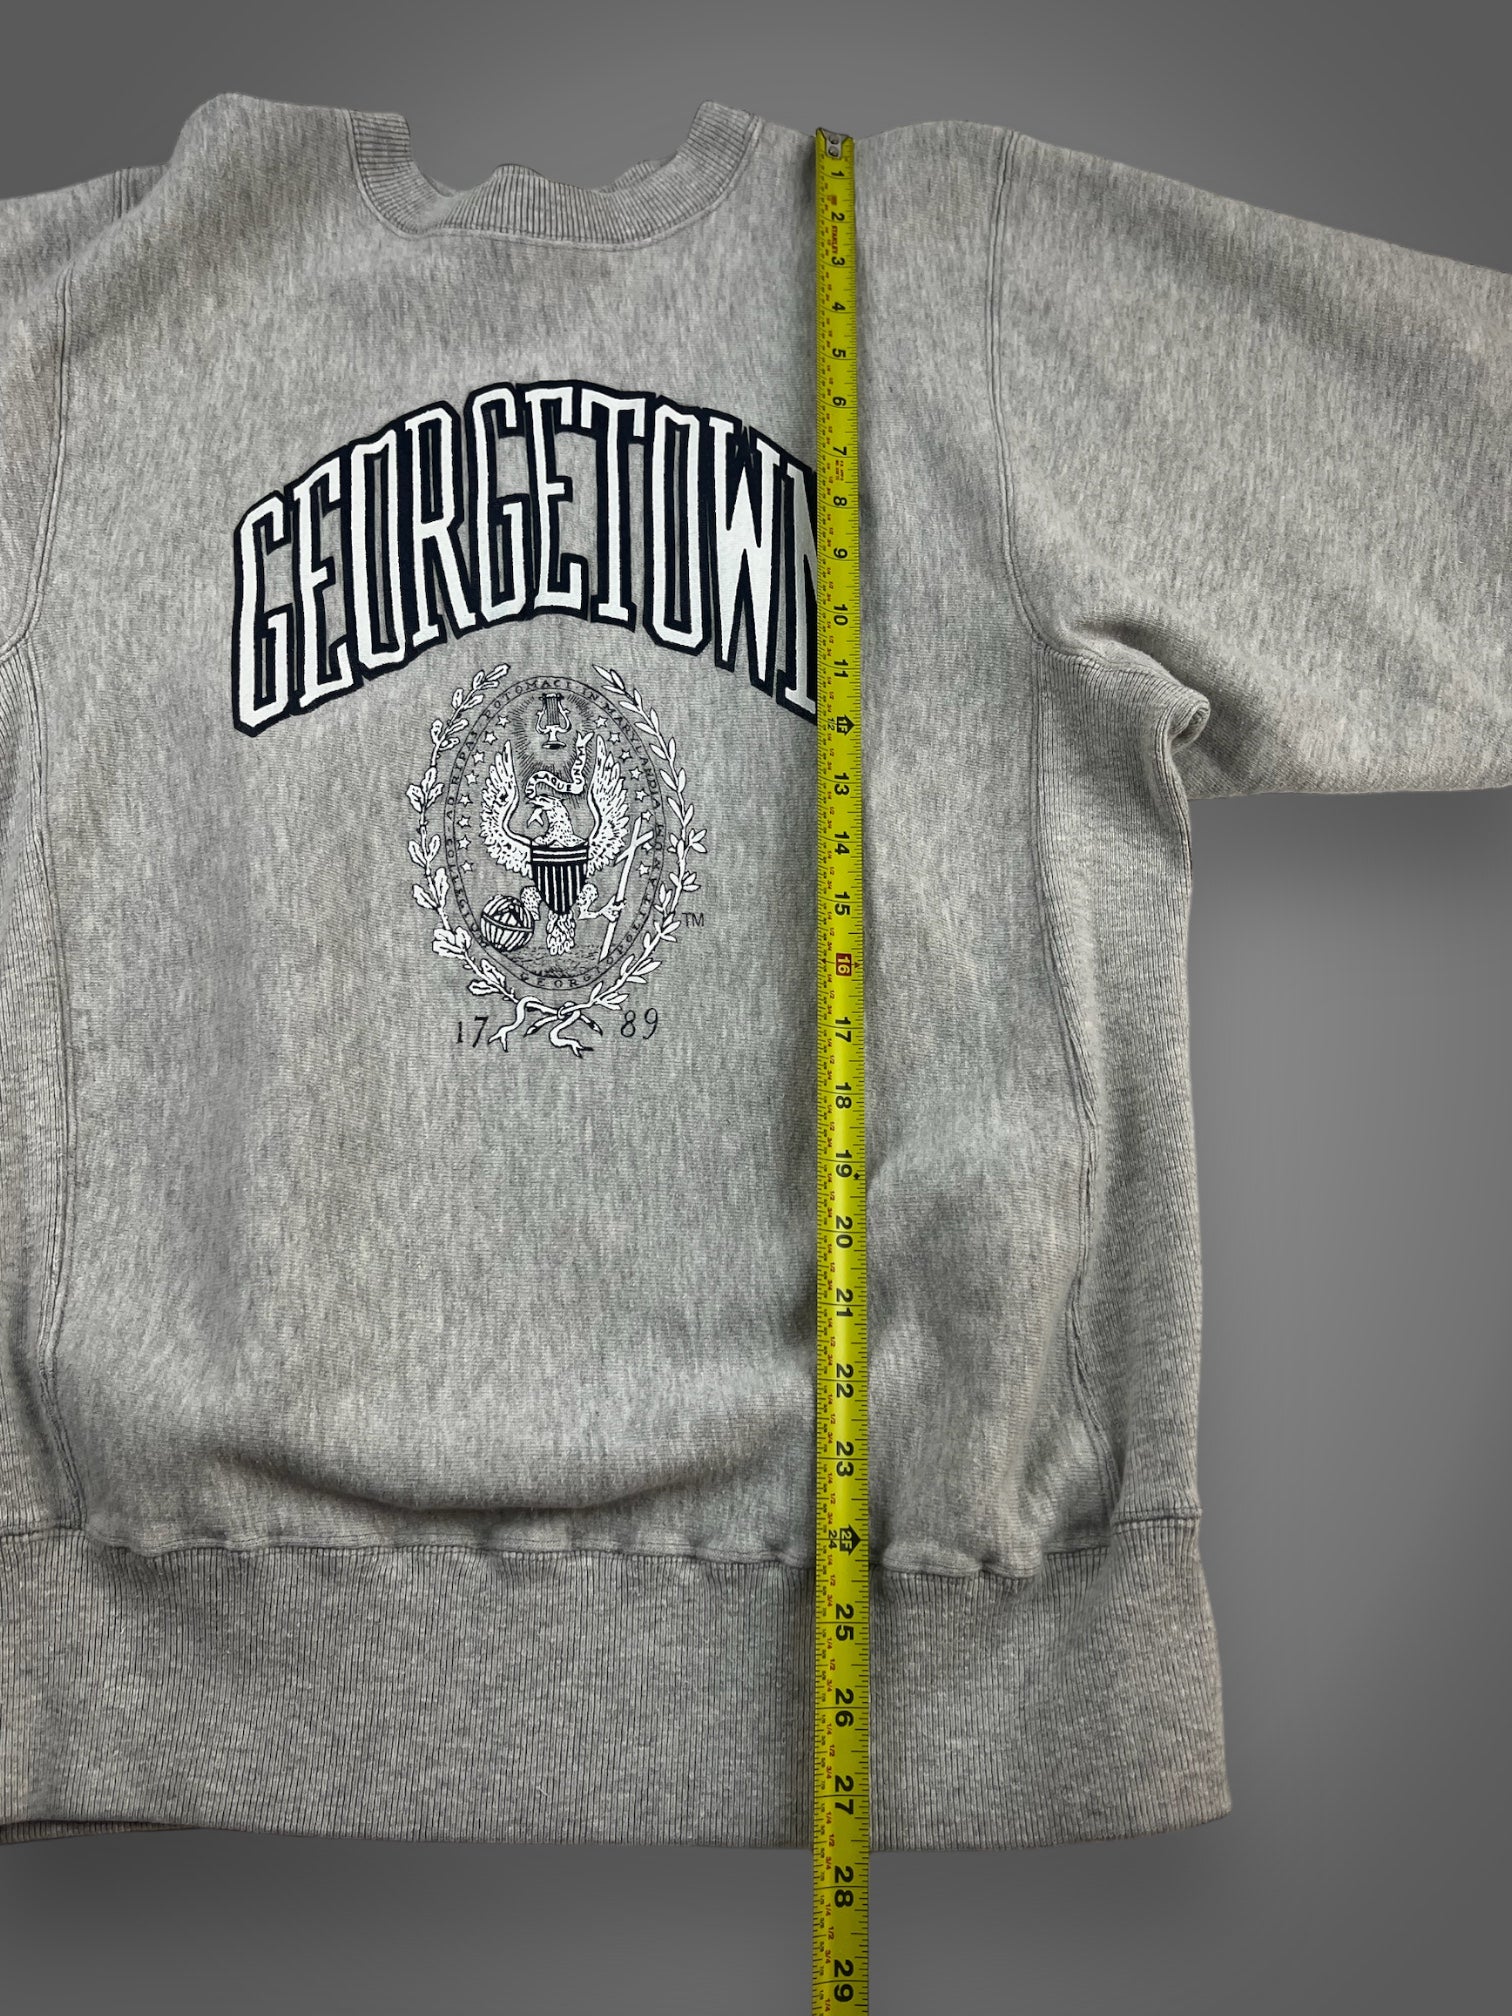 90s Kellsport Georgetown crewneck sweatshirt L